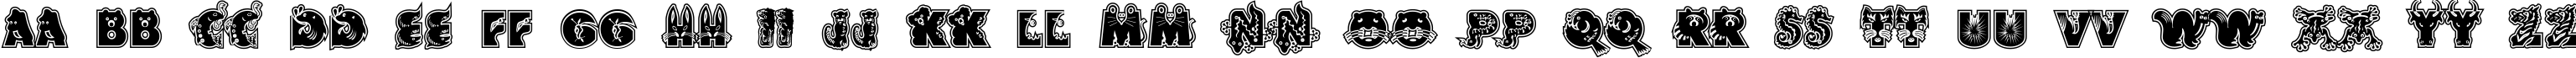 Пример написания английского алфавита шрифтом FK Critter Collage.kz